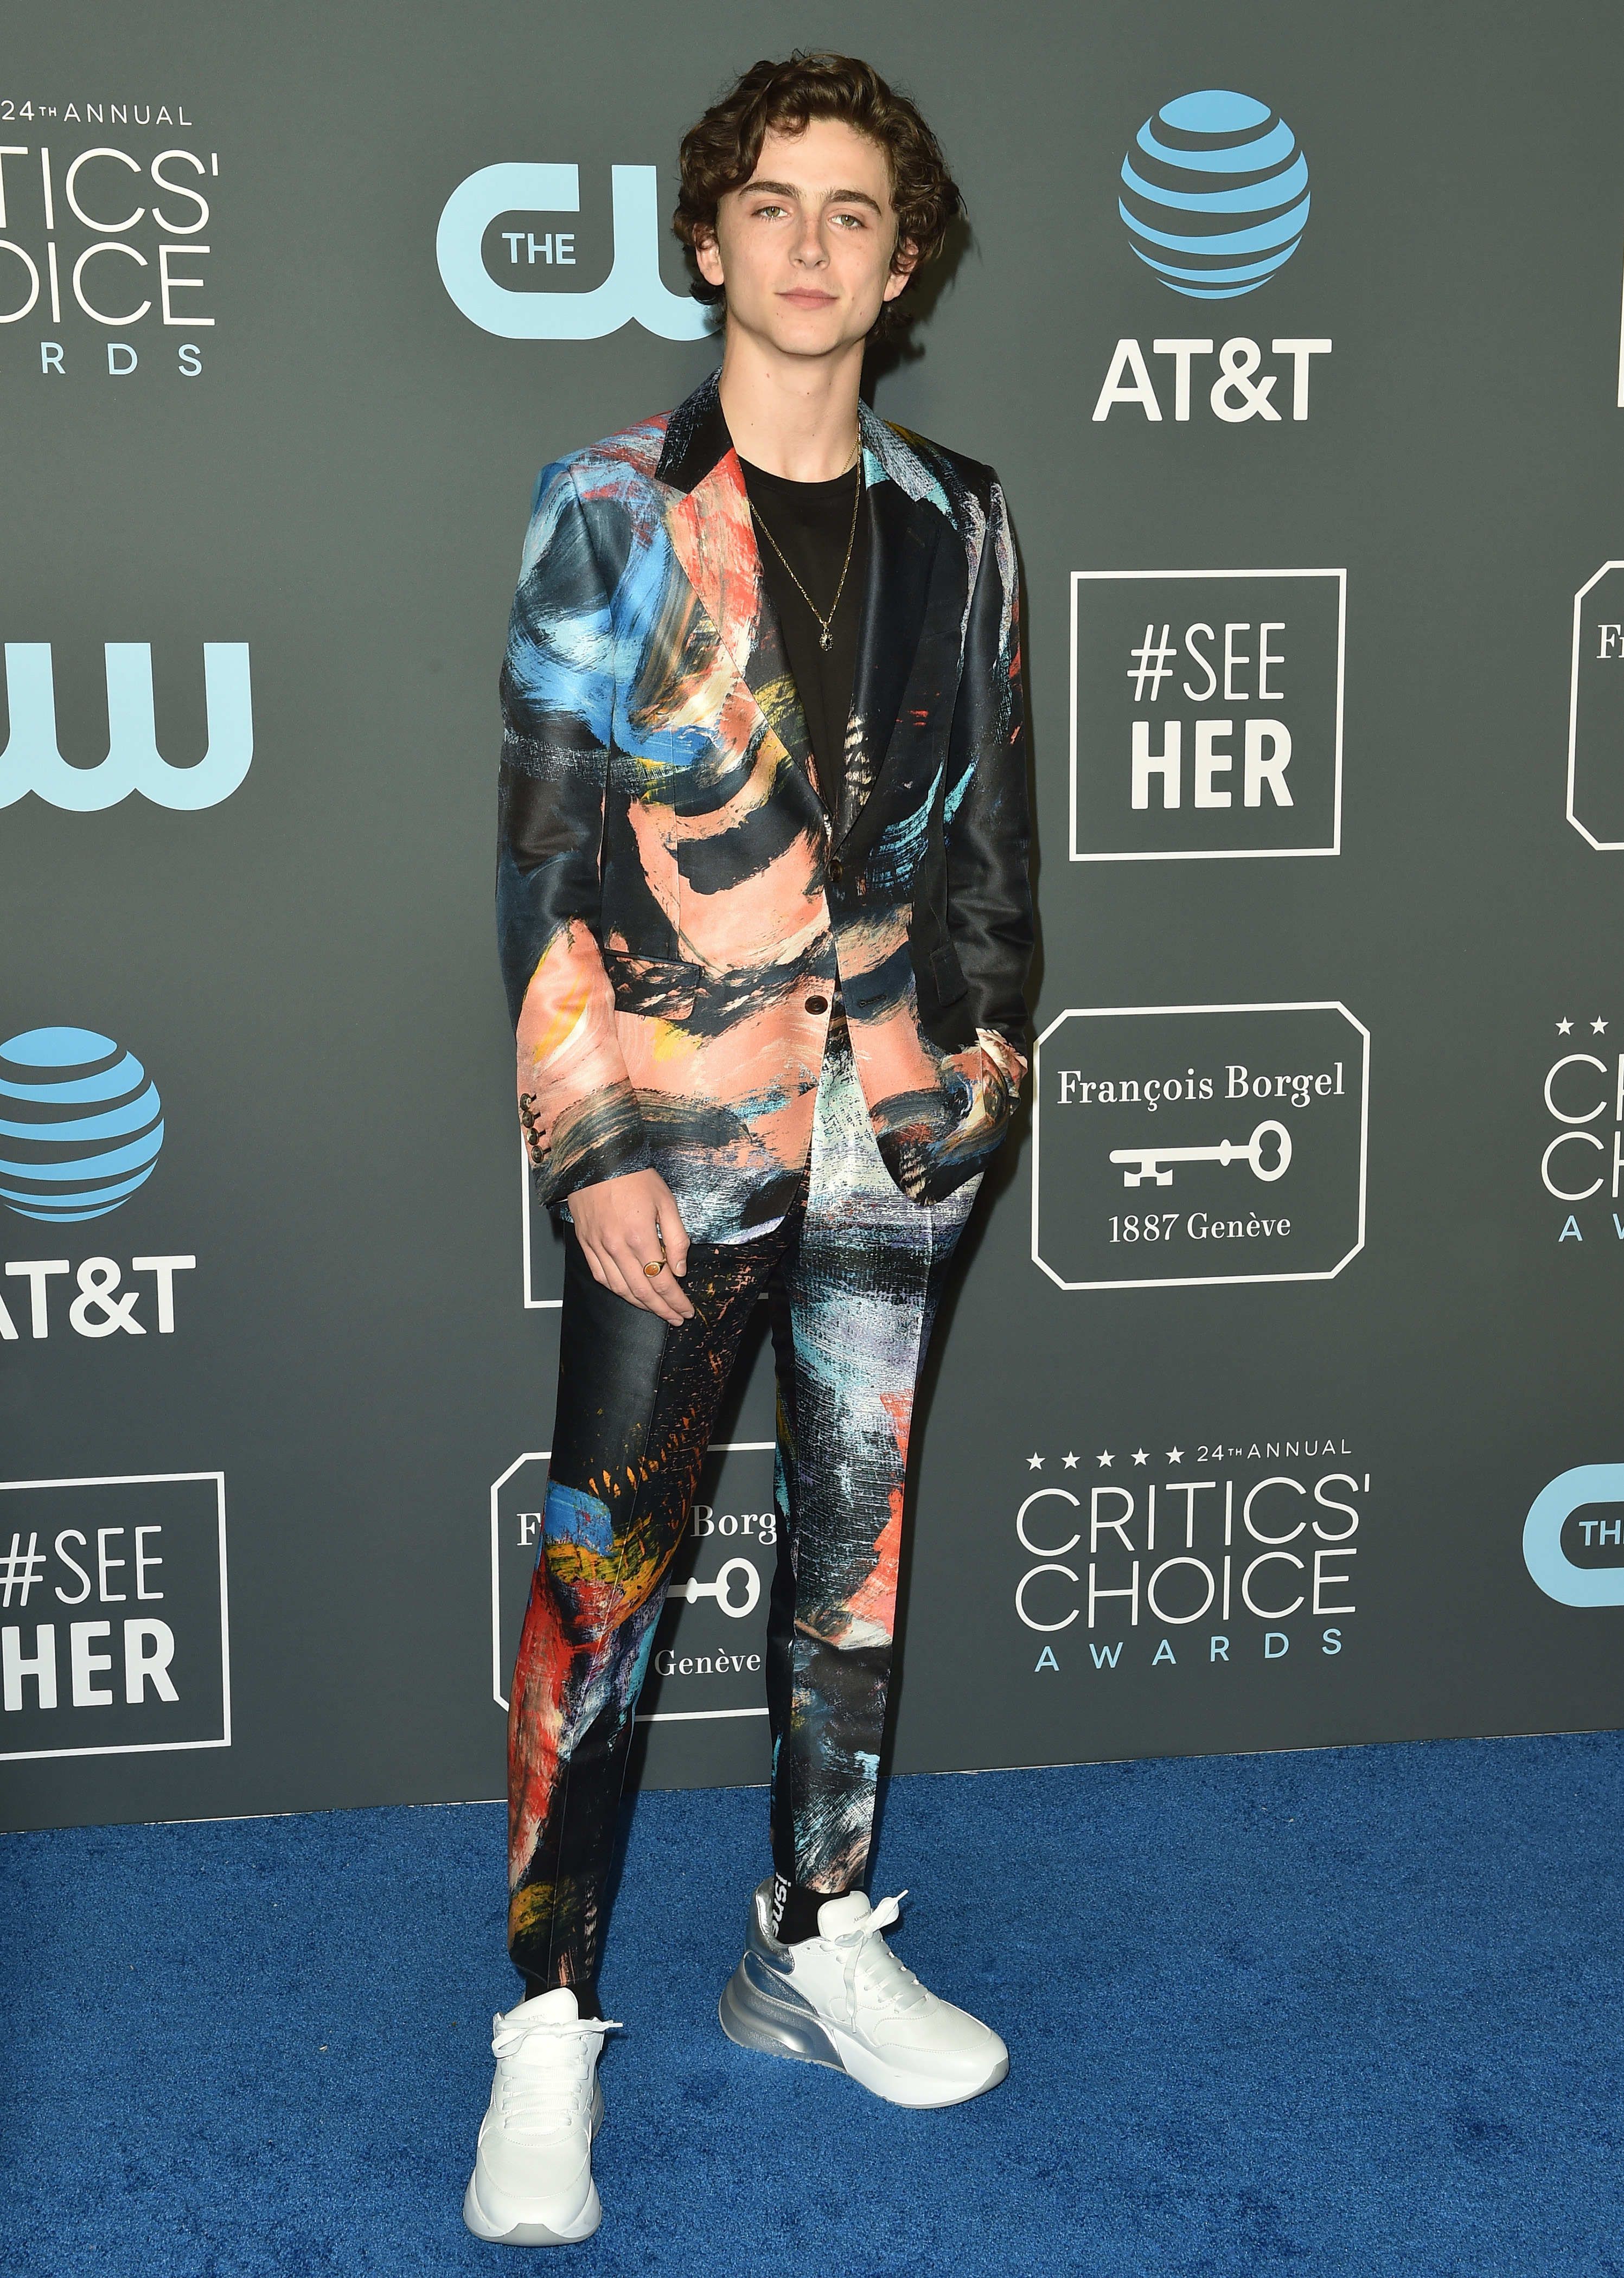 Timothée wears a suit that features colorful paint swipes